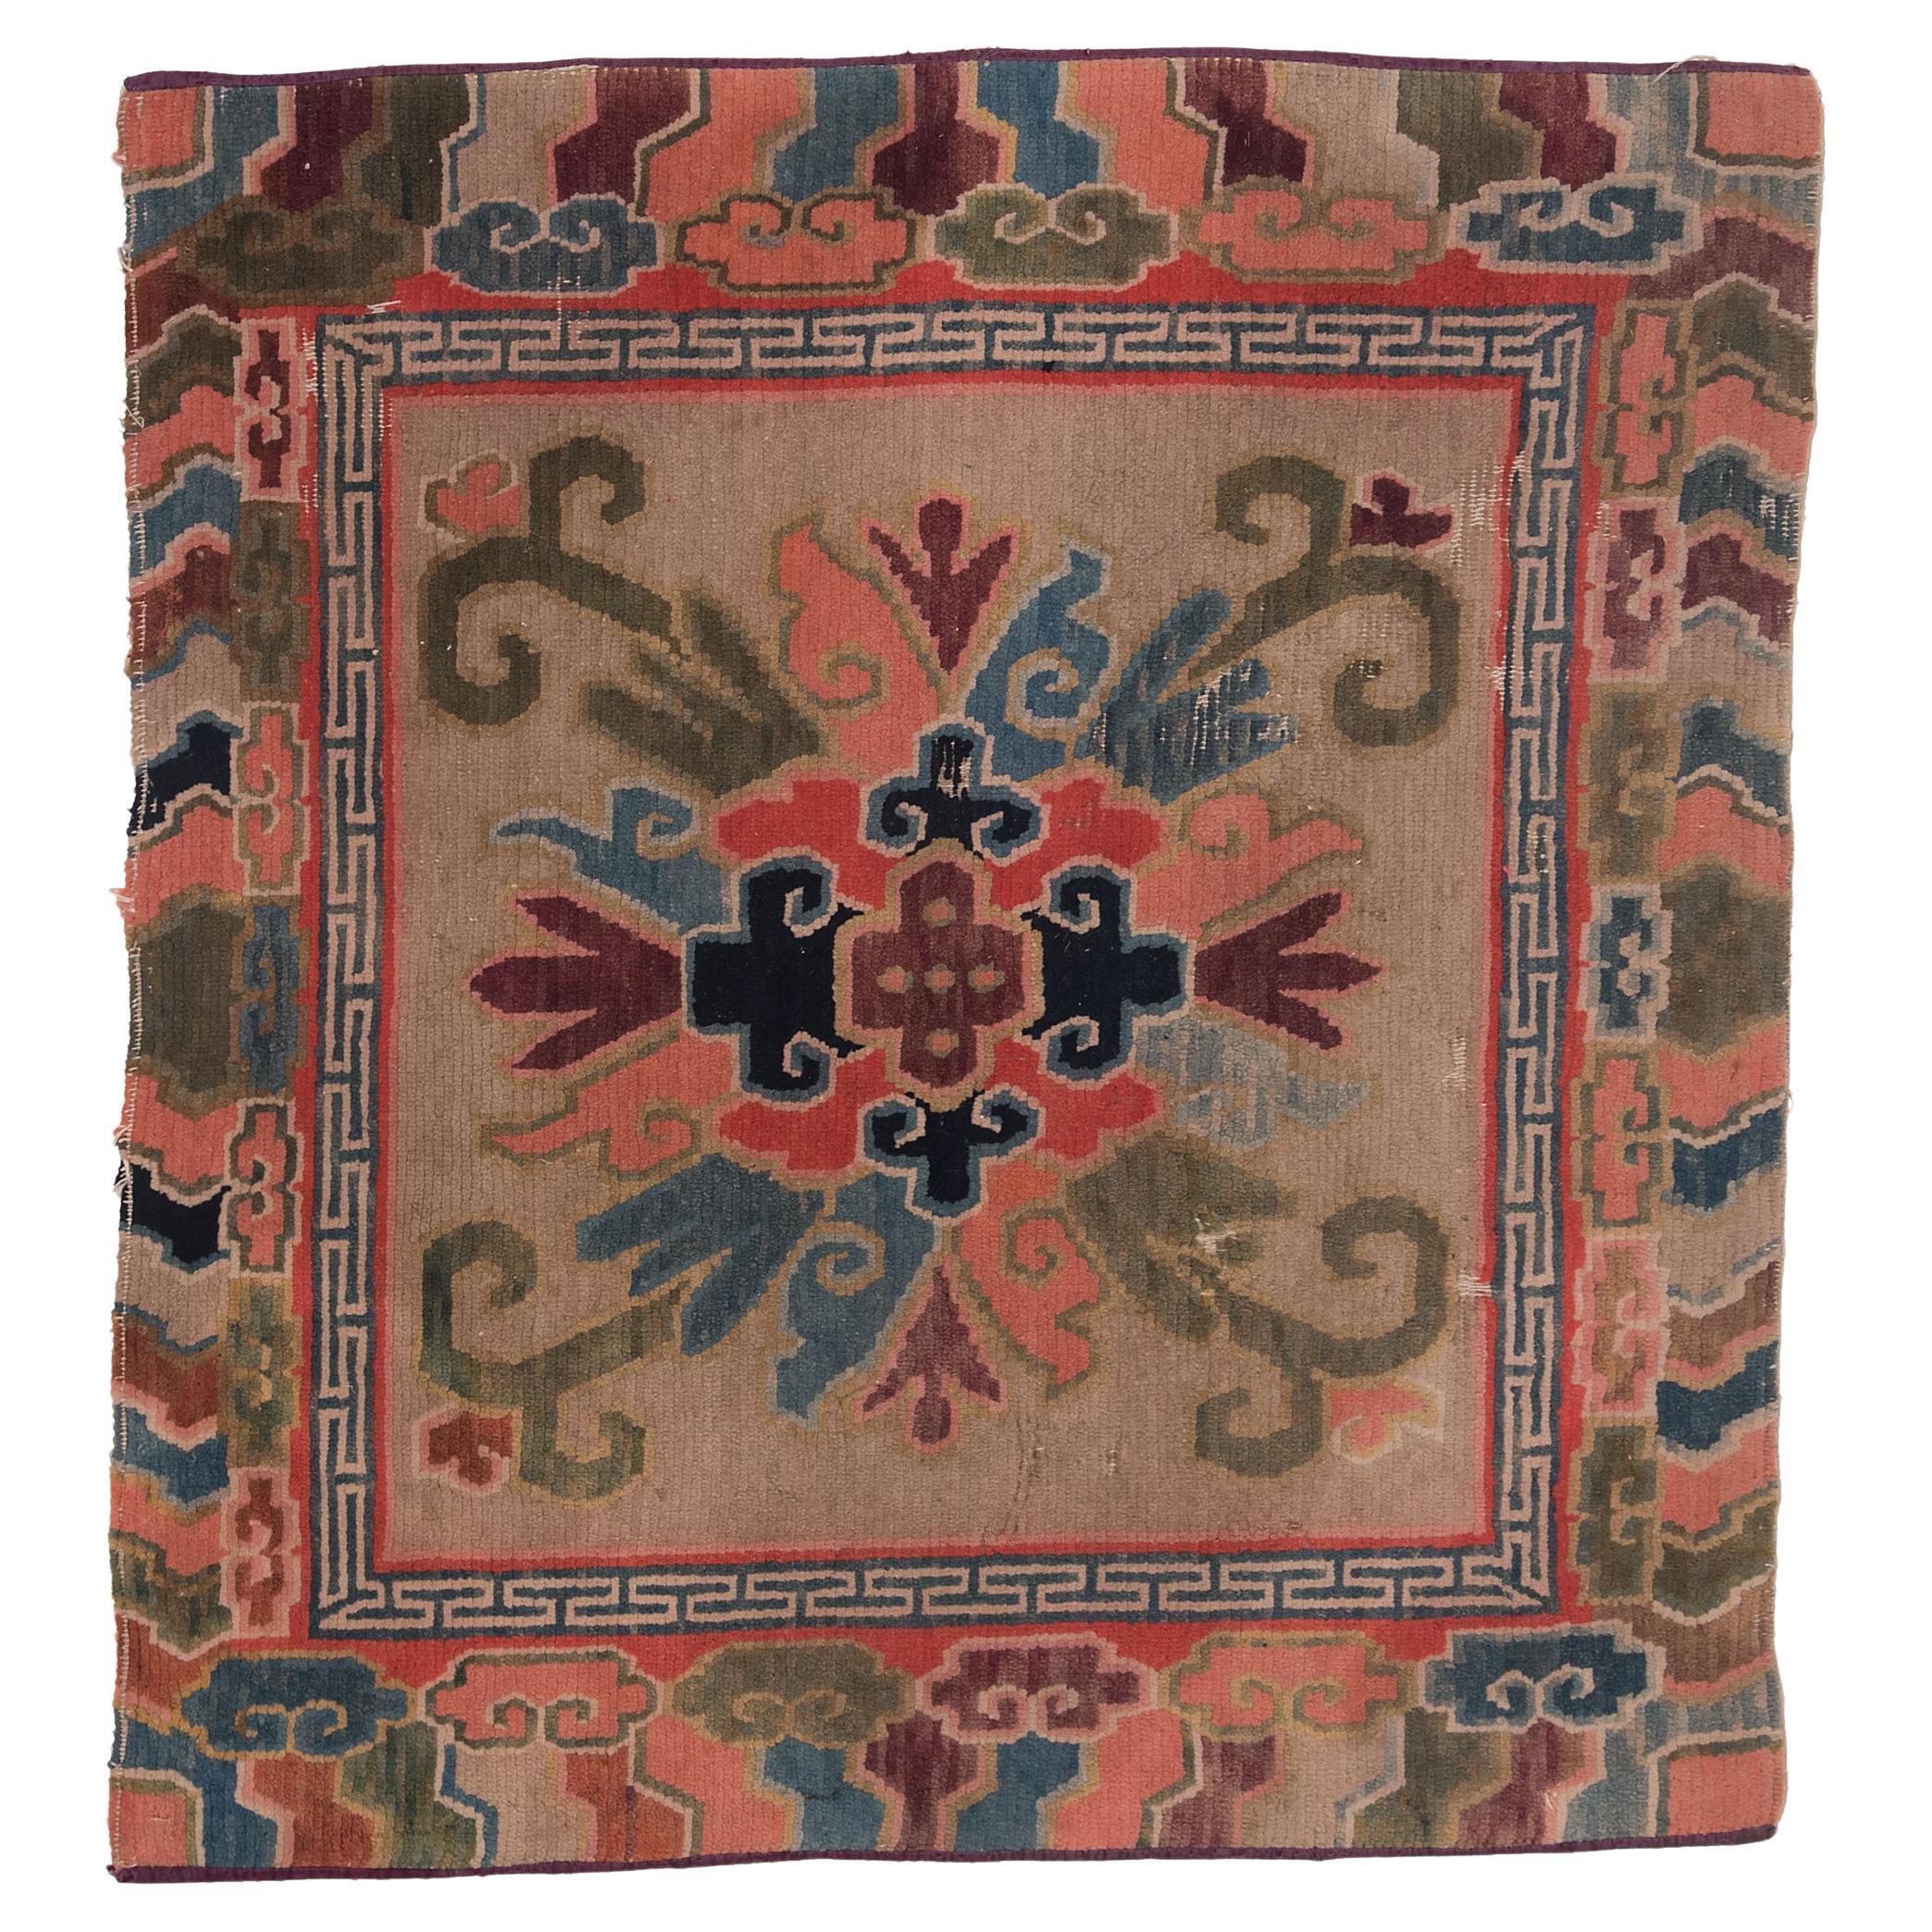 Tibetan Meditation Carpet with Cloud-Band Border, c. 1900